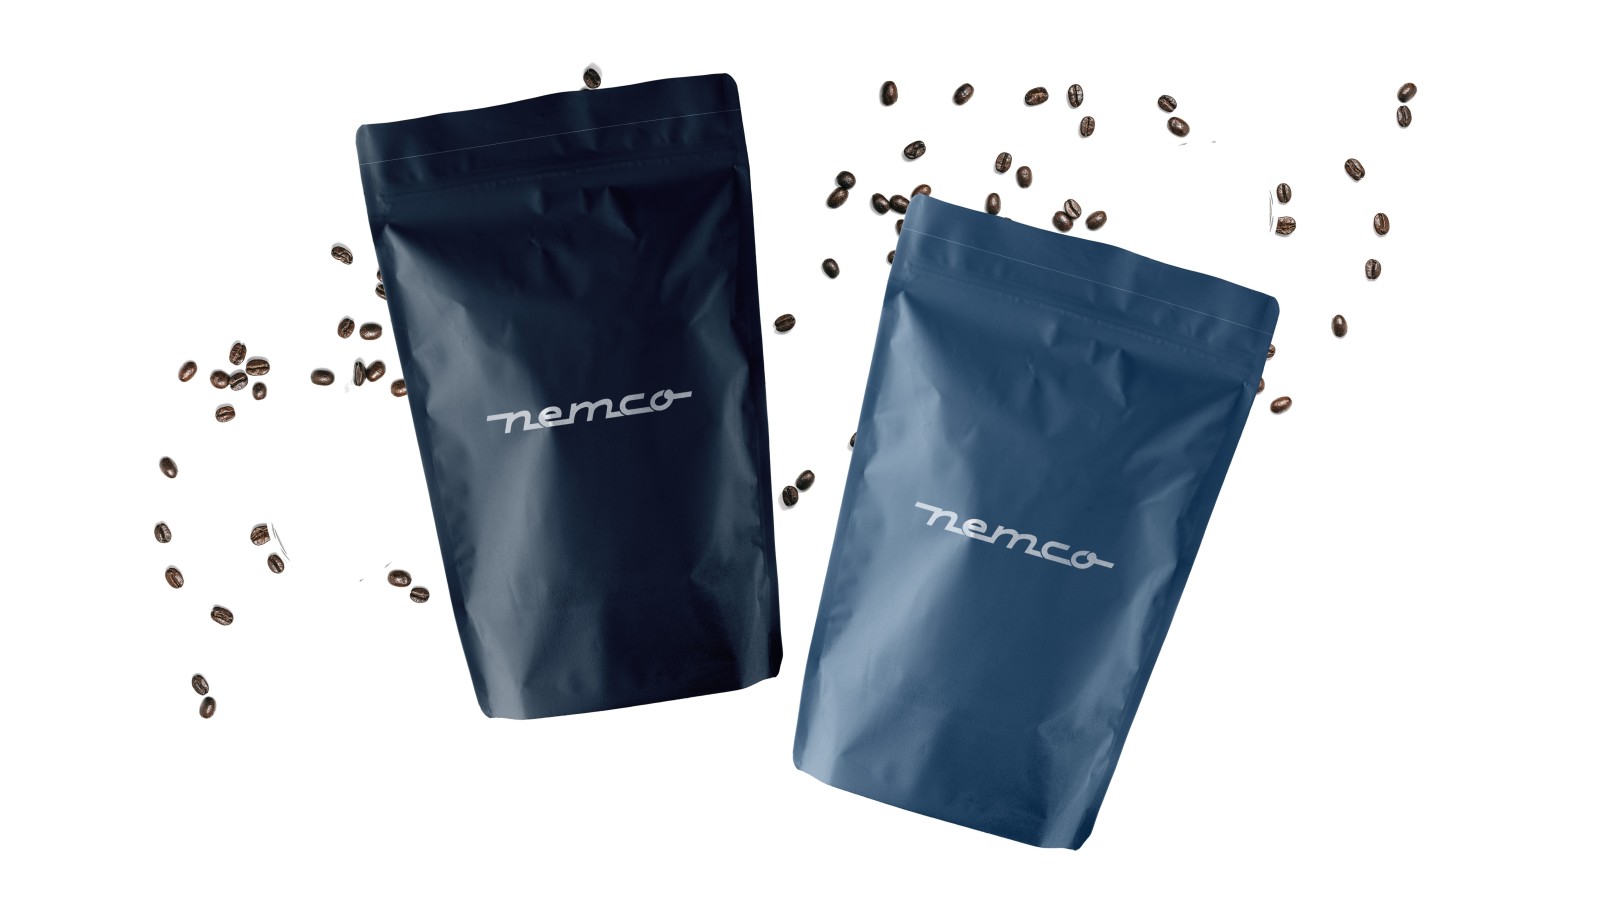 Kaffeposer og ståposer - Køb kvalitetssikker emballage - kaffeposer kan fås med ventil og lynlås, med tryk, mange materialetyper og størrelser. 